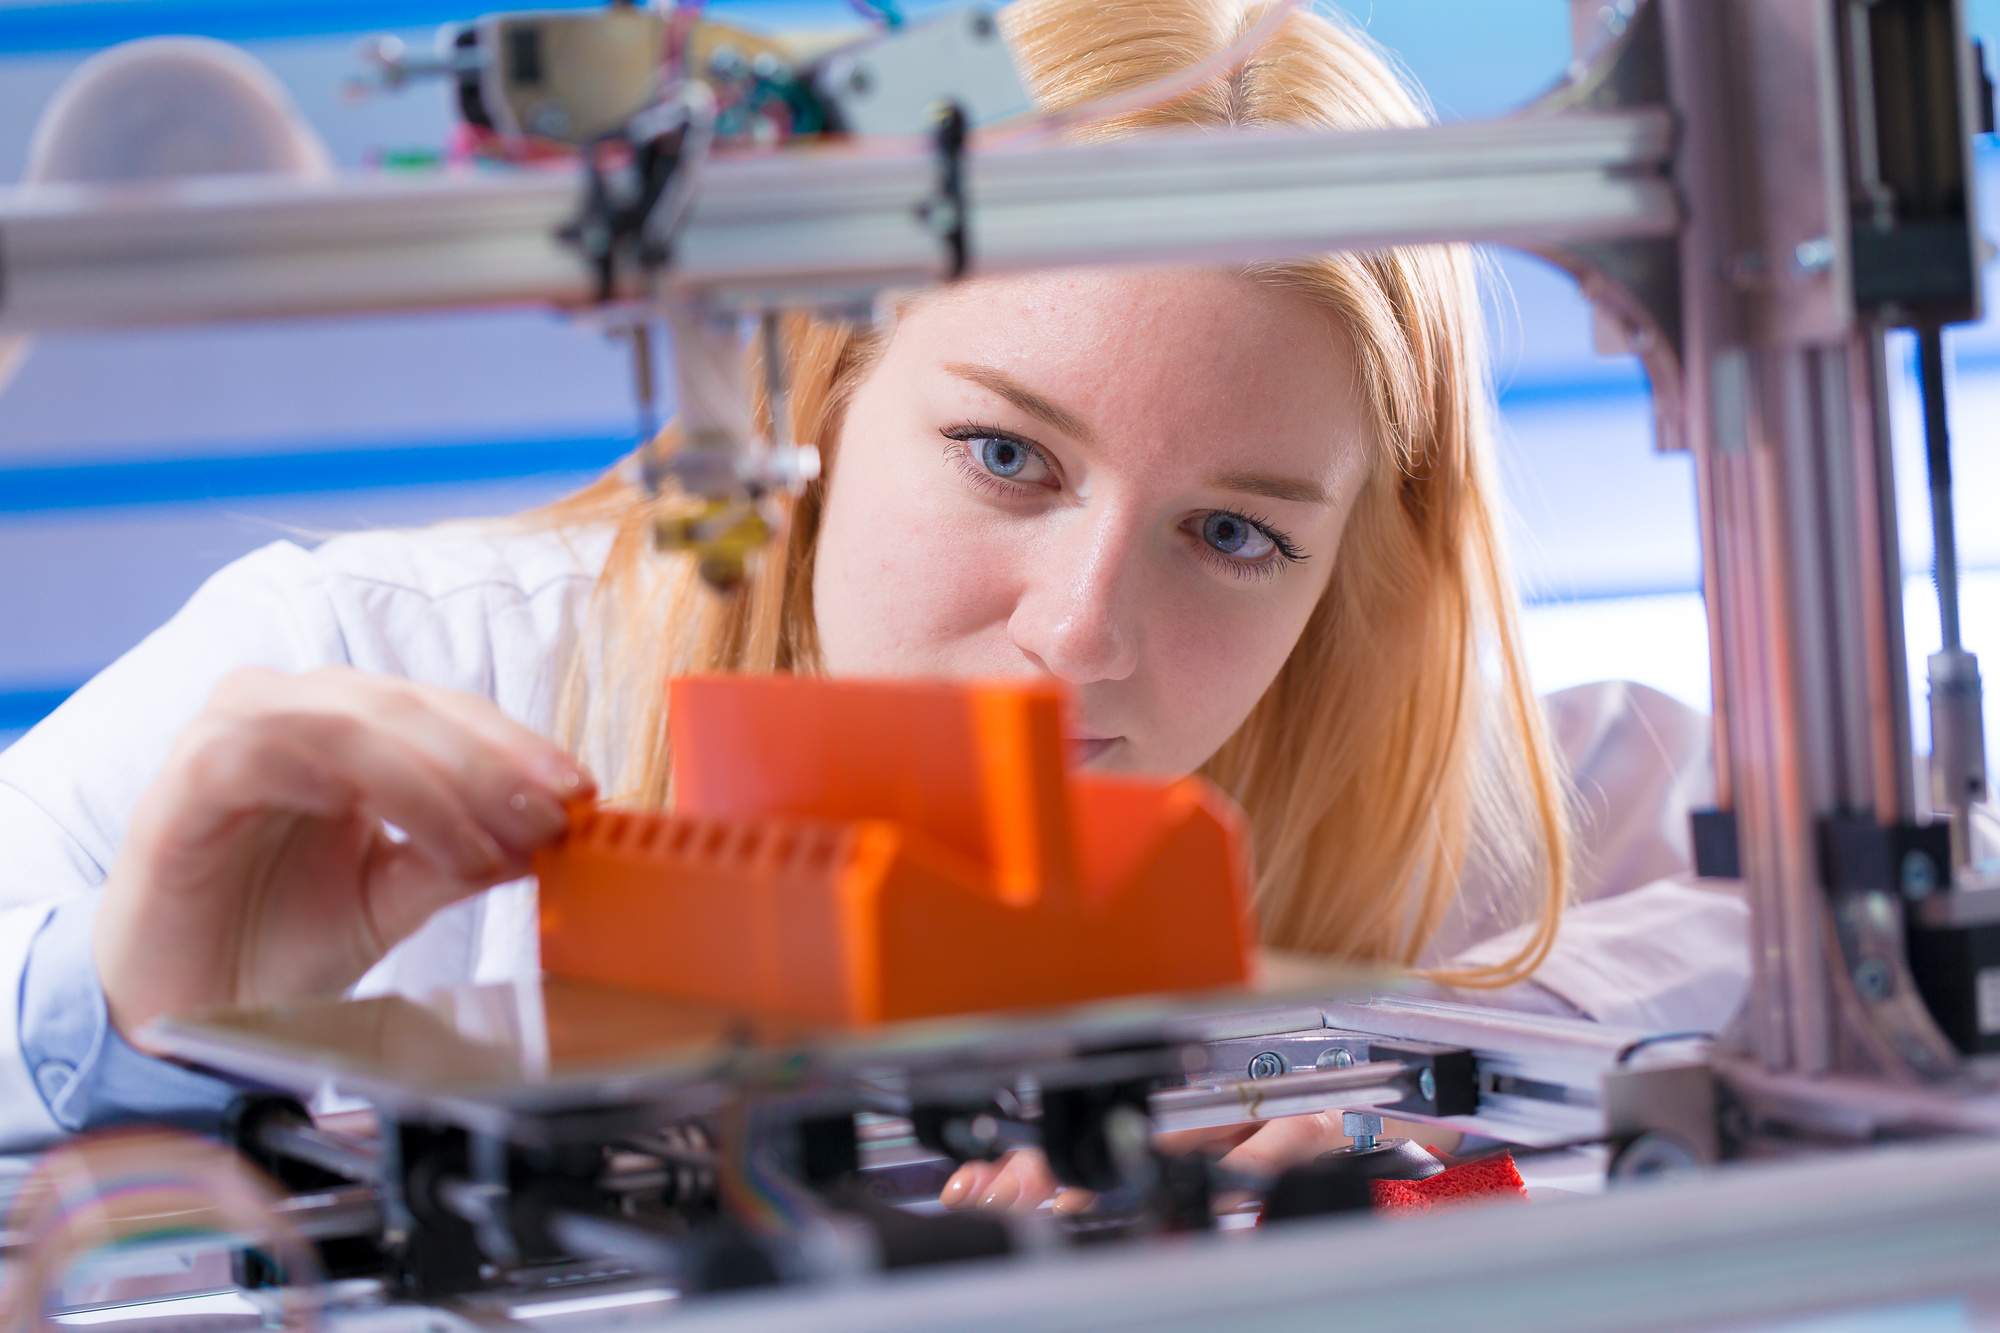 How to Make 3D Printer Models